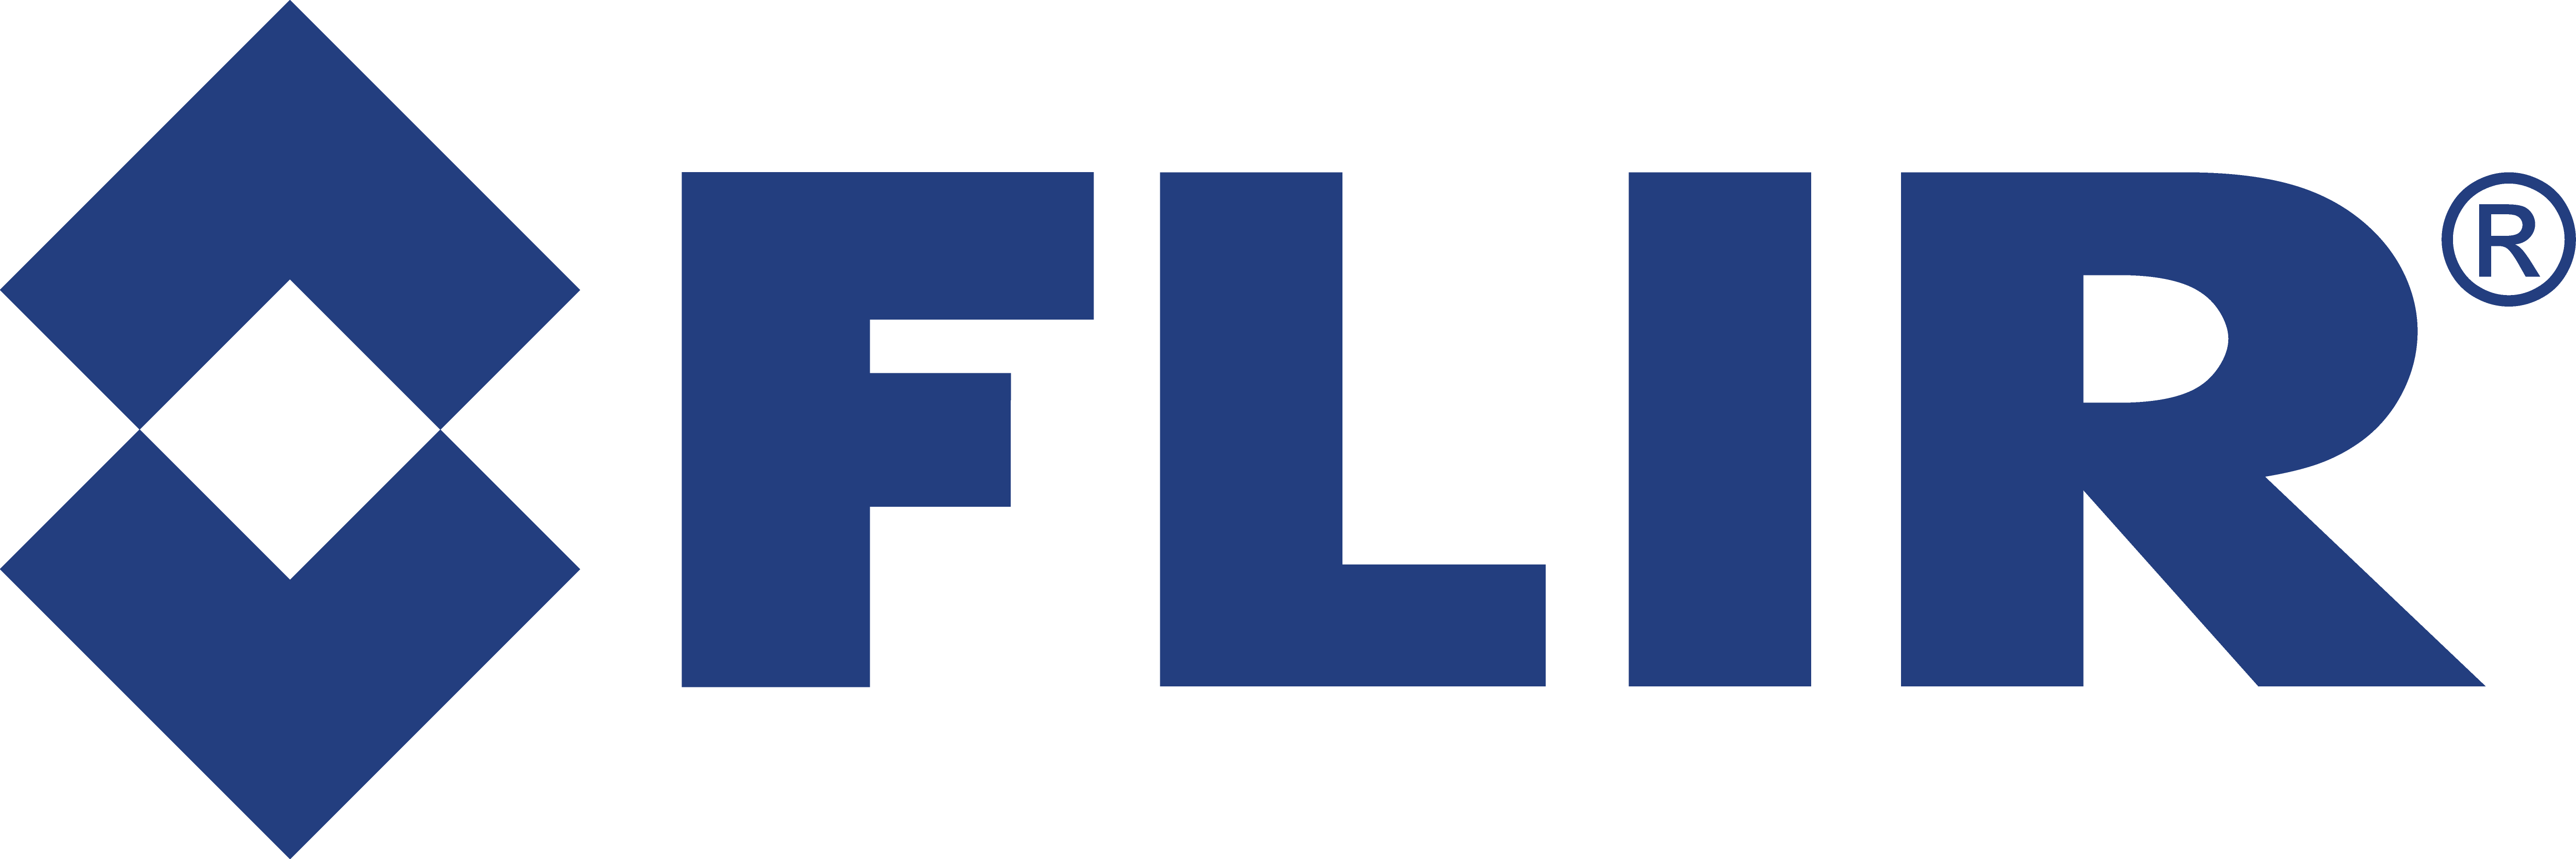 FLIR Systems Inc logo